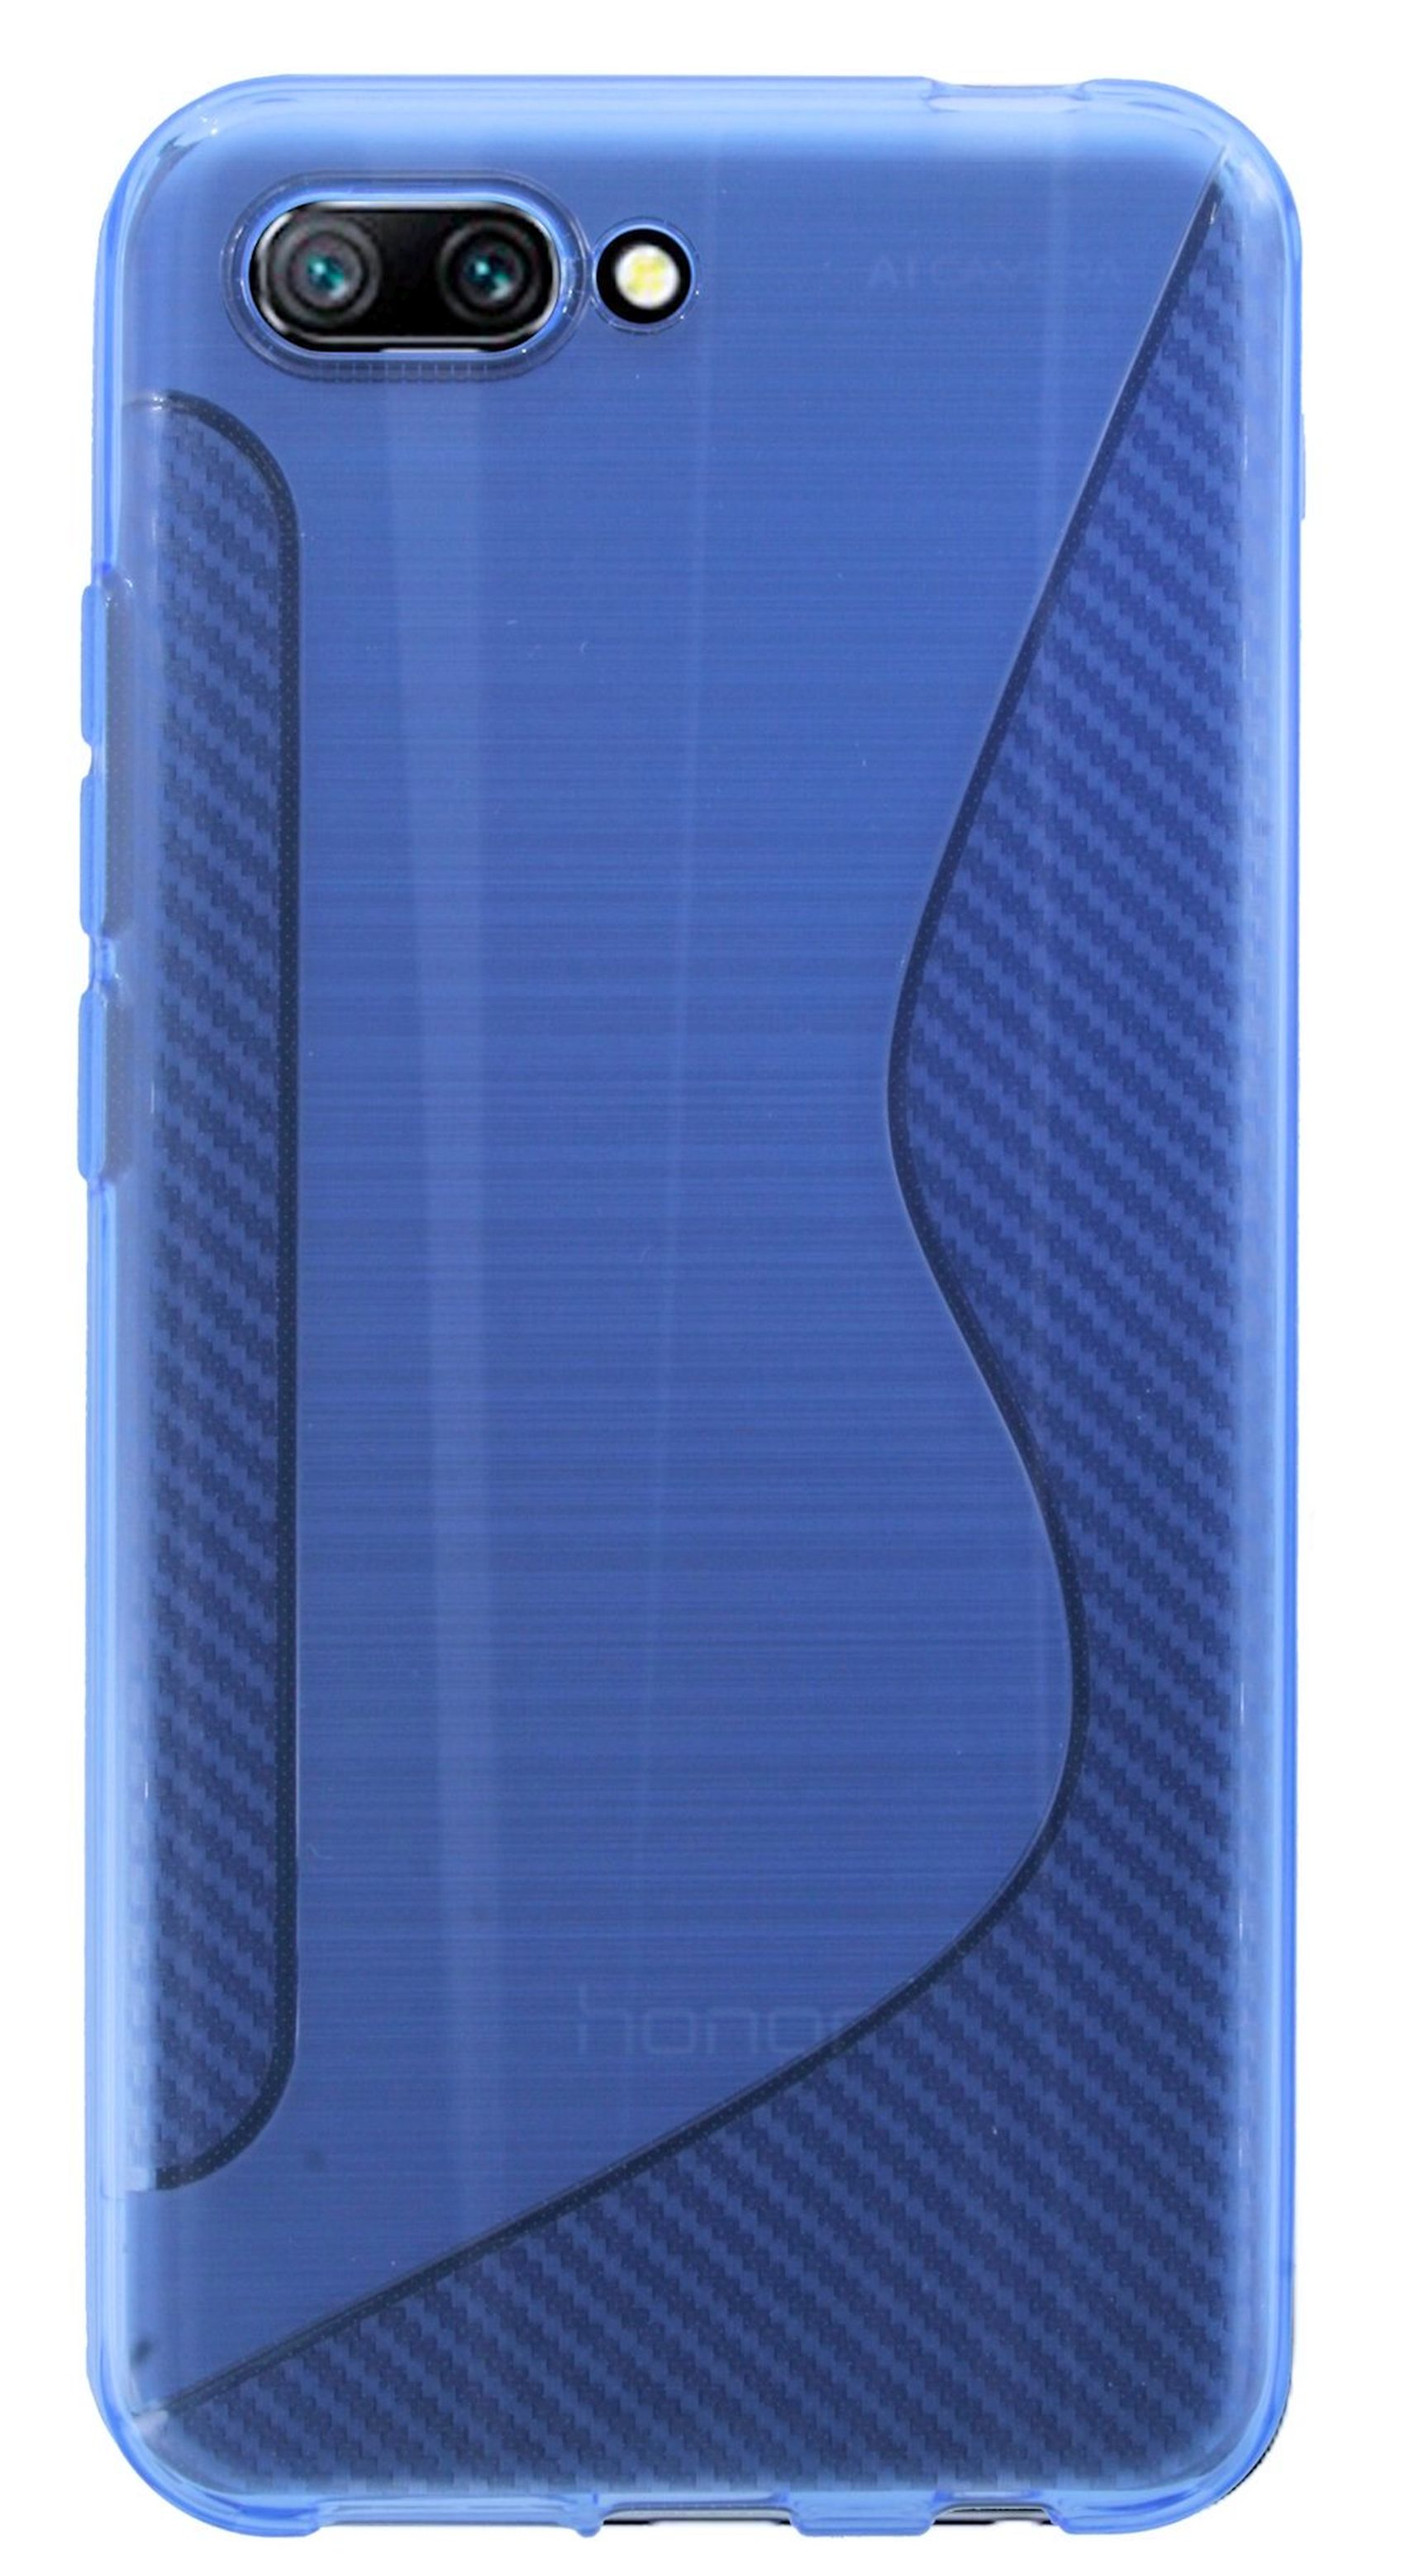 COFI HONOR 10//S-Line TPU Silikonschale Cover Bumper Case in Honor, Blau, Zubehör Bumper, Hülle Silikon SchutzHülle 10, Blau